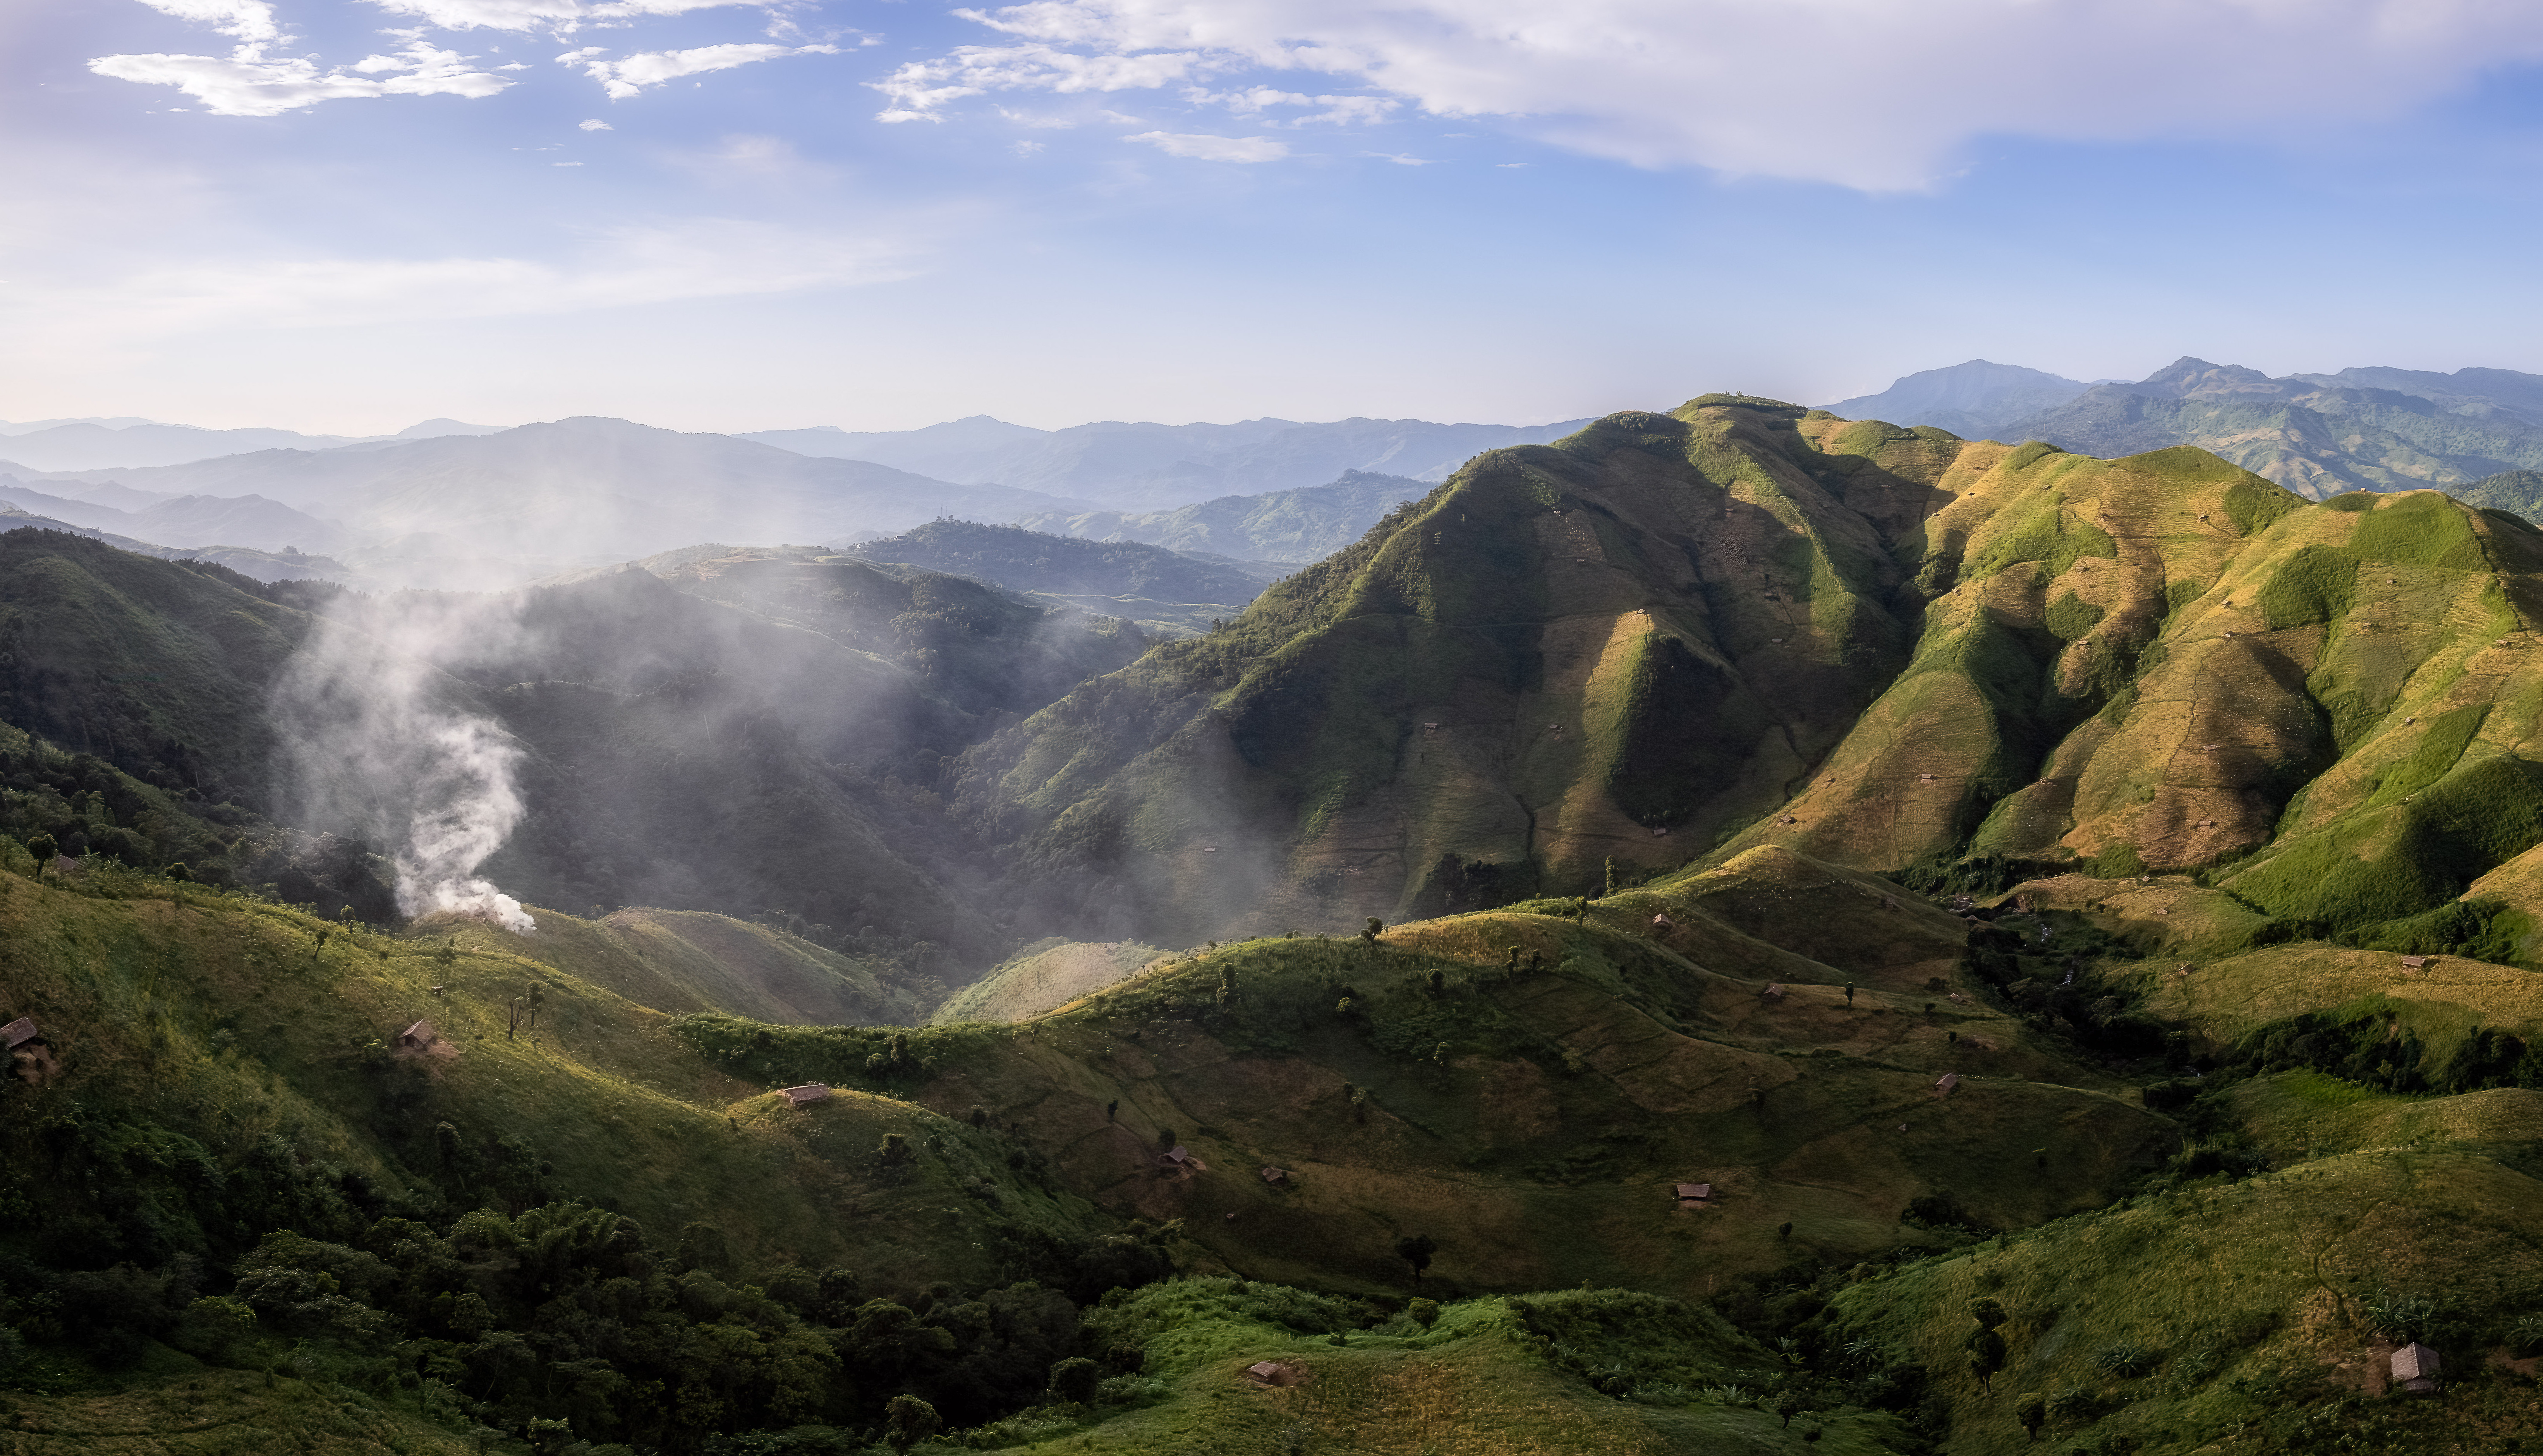 The beautiful landscape of Nagaland, India